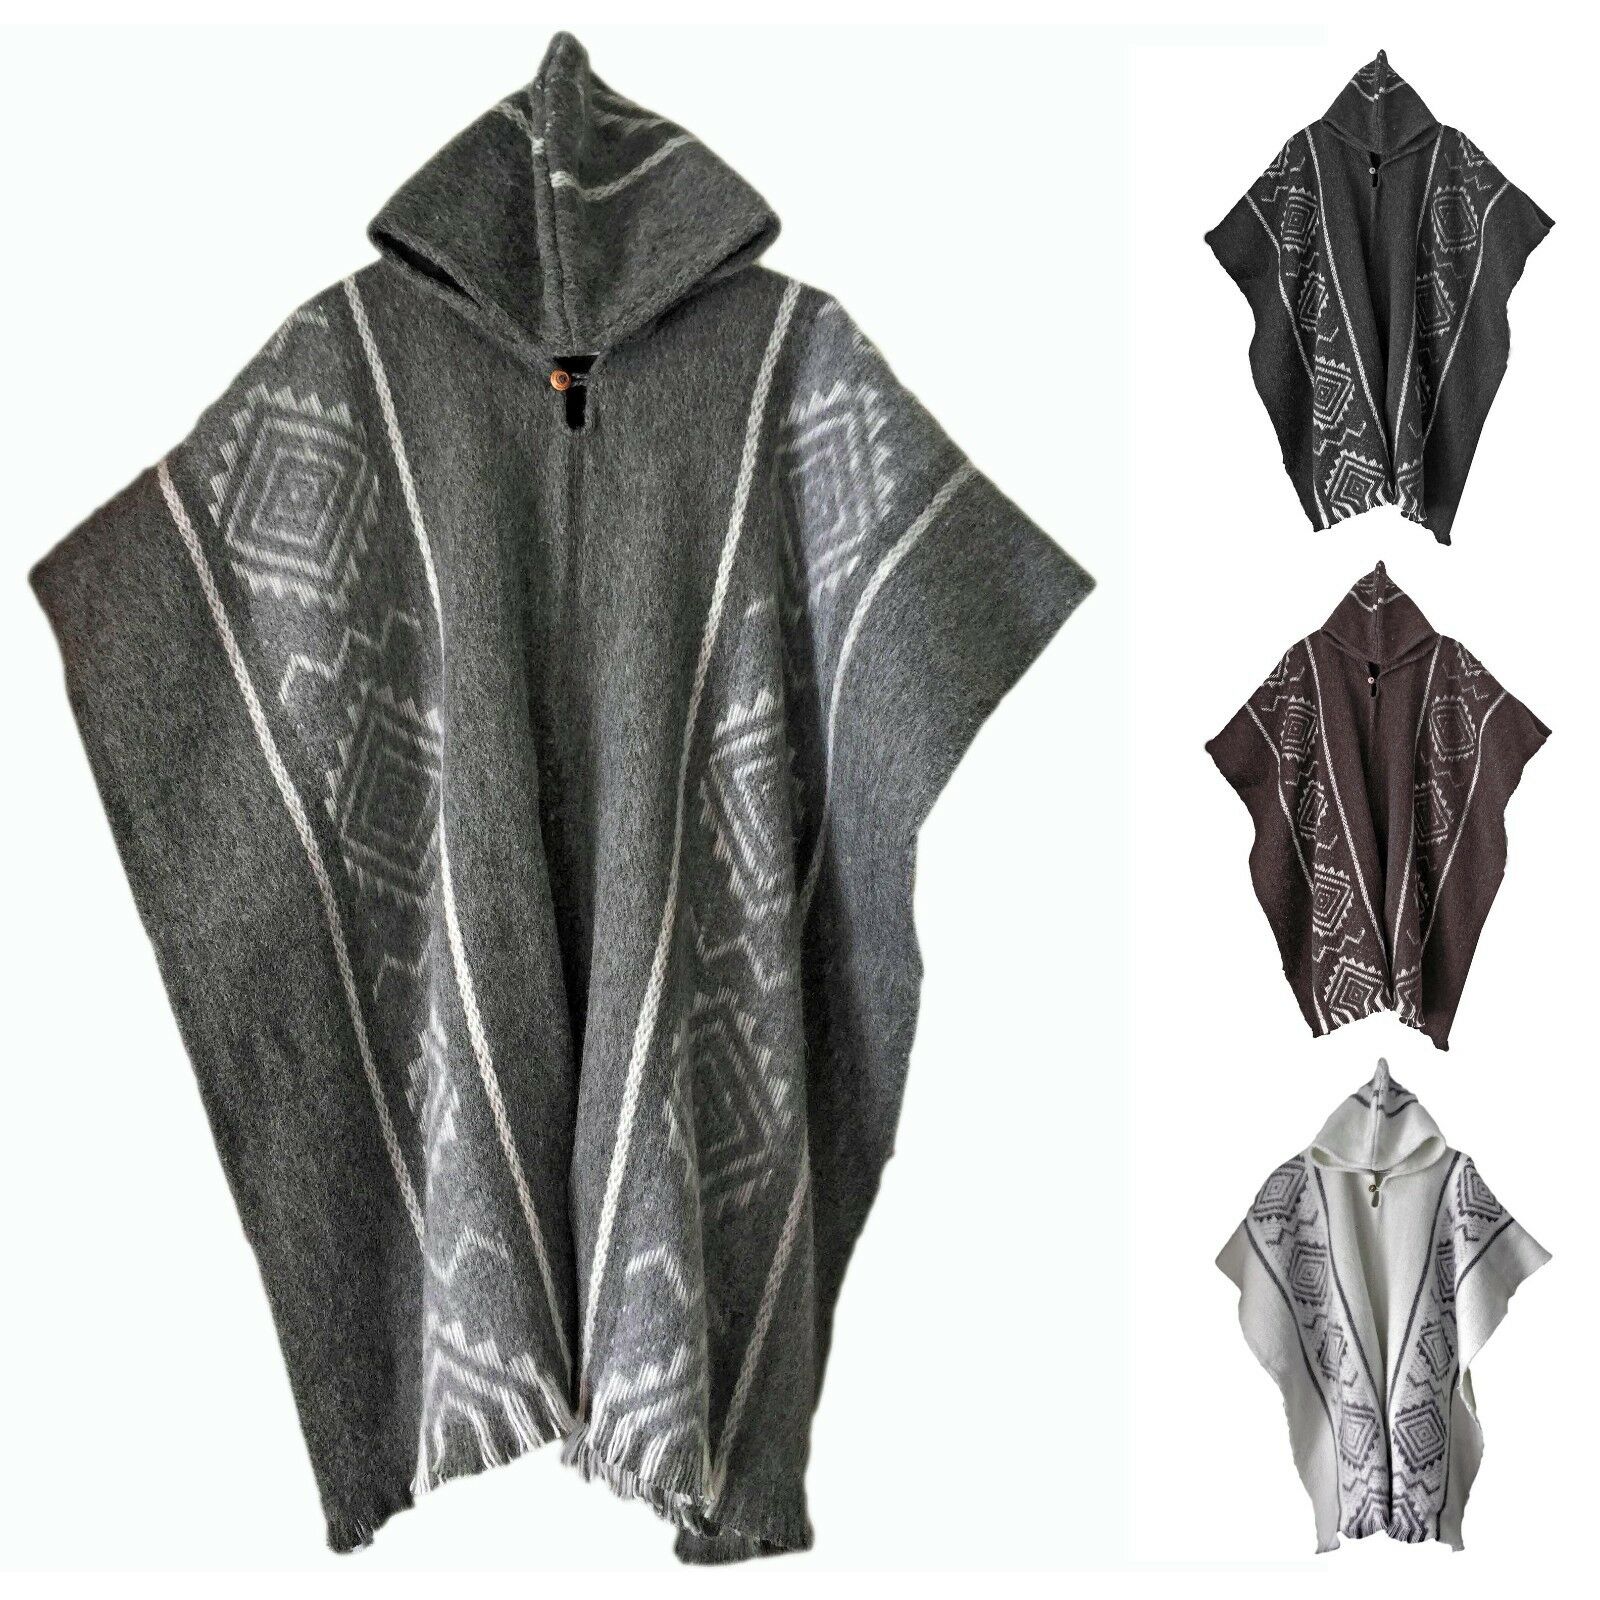 Wholesale Lot Of 10 Llama Wool Unisex South American Hooded Ponchos Pullovers - diamond pattern